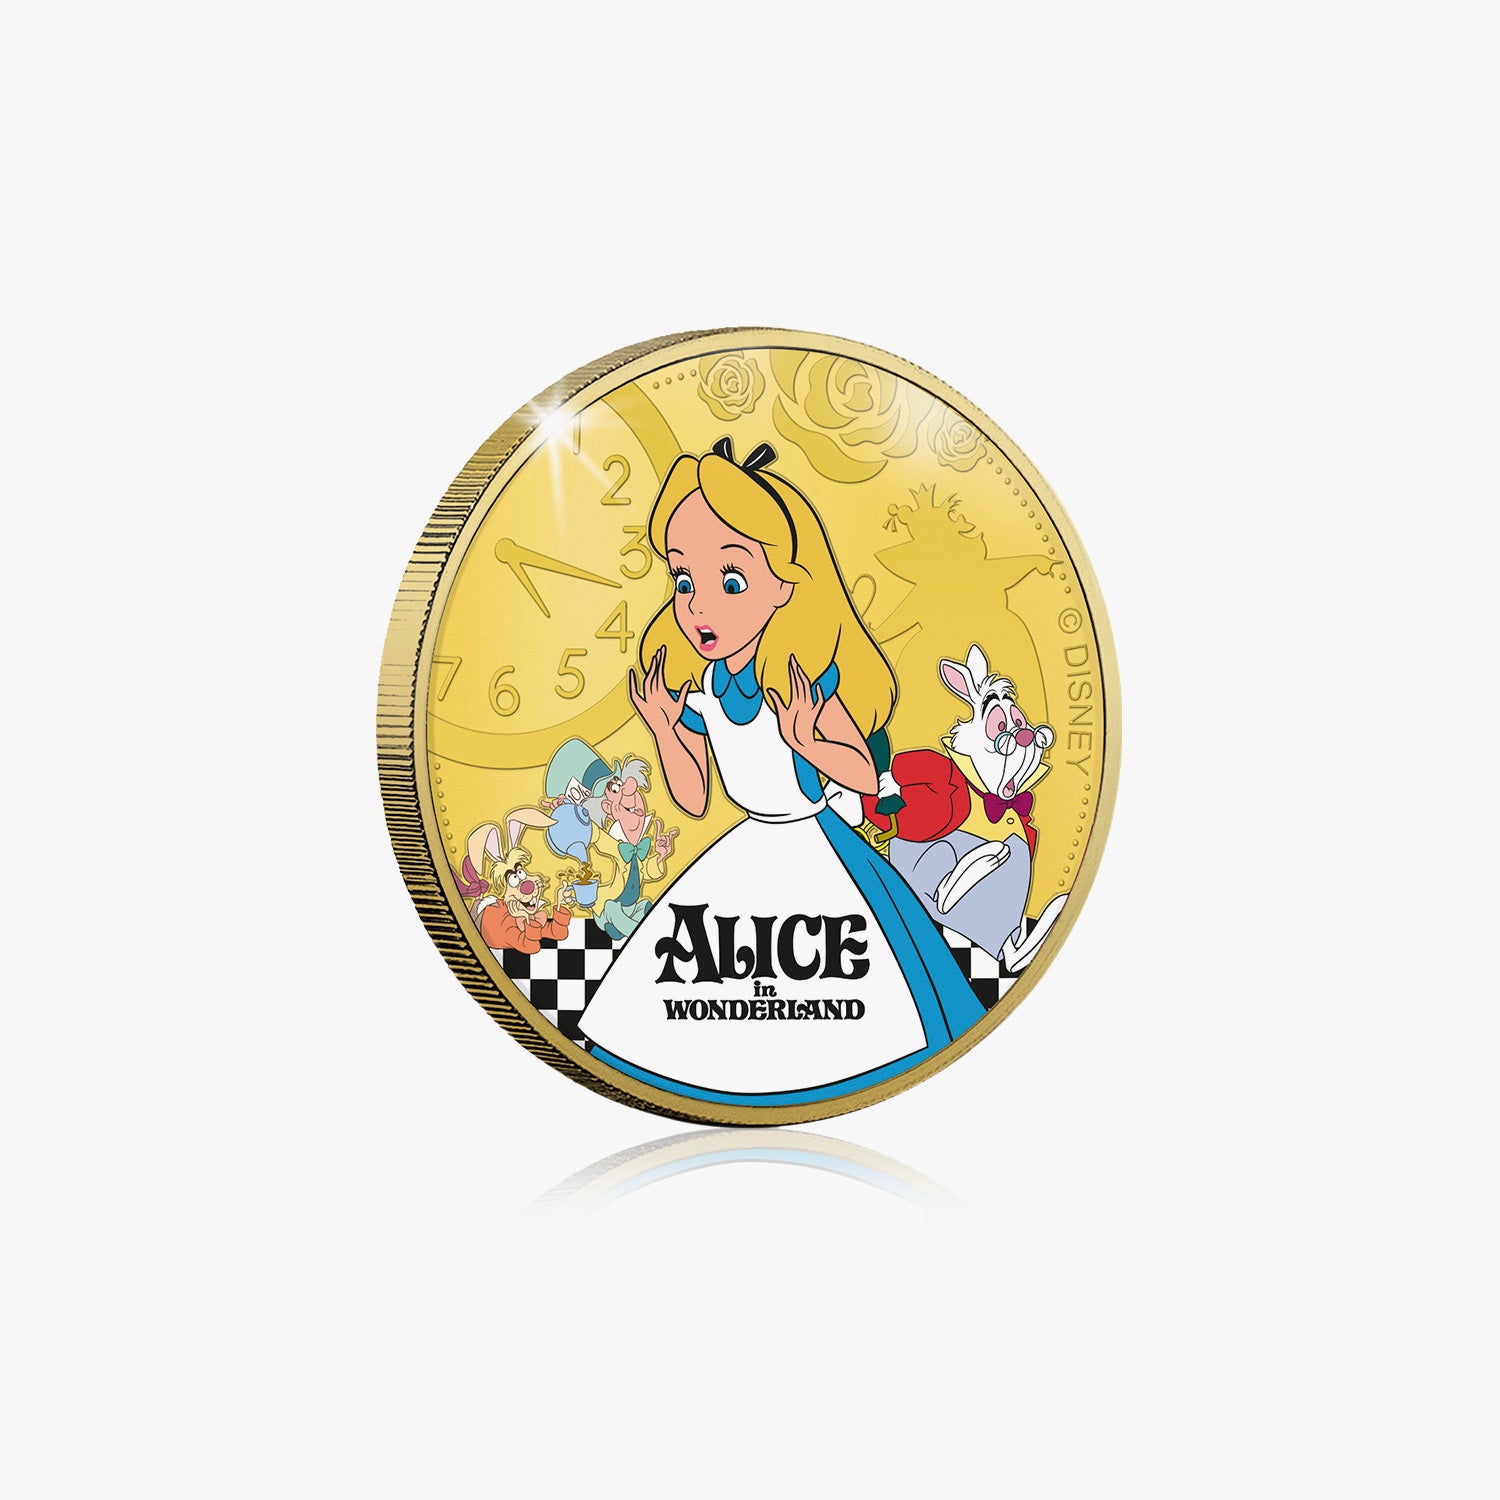 Alice In Wonderland Gold-Plated Commemorative